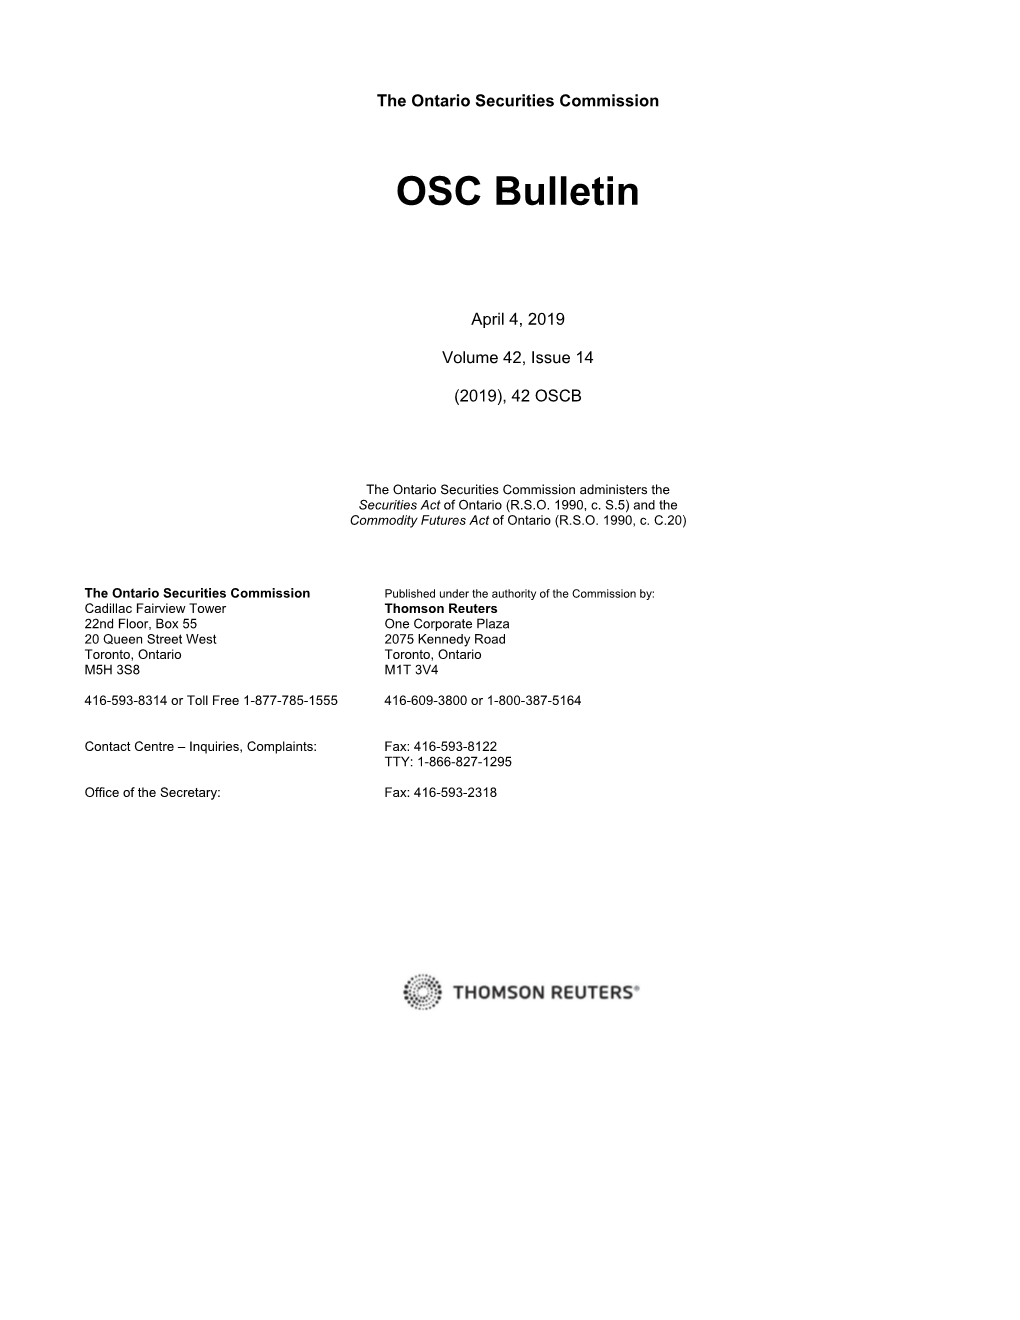 OSC Bulletin Volume 42, Issue 14 (April 4, 2019)